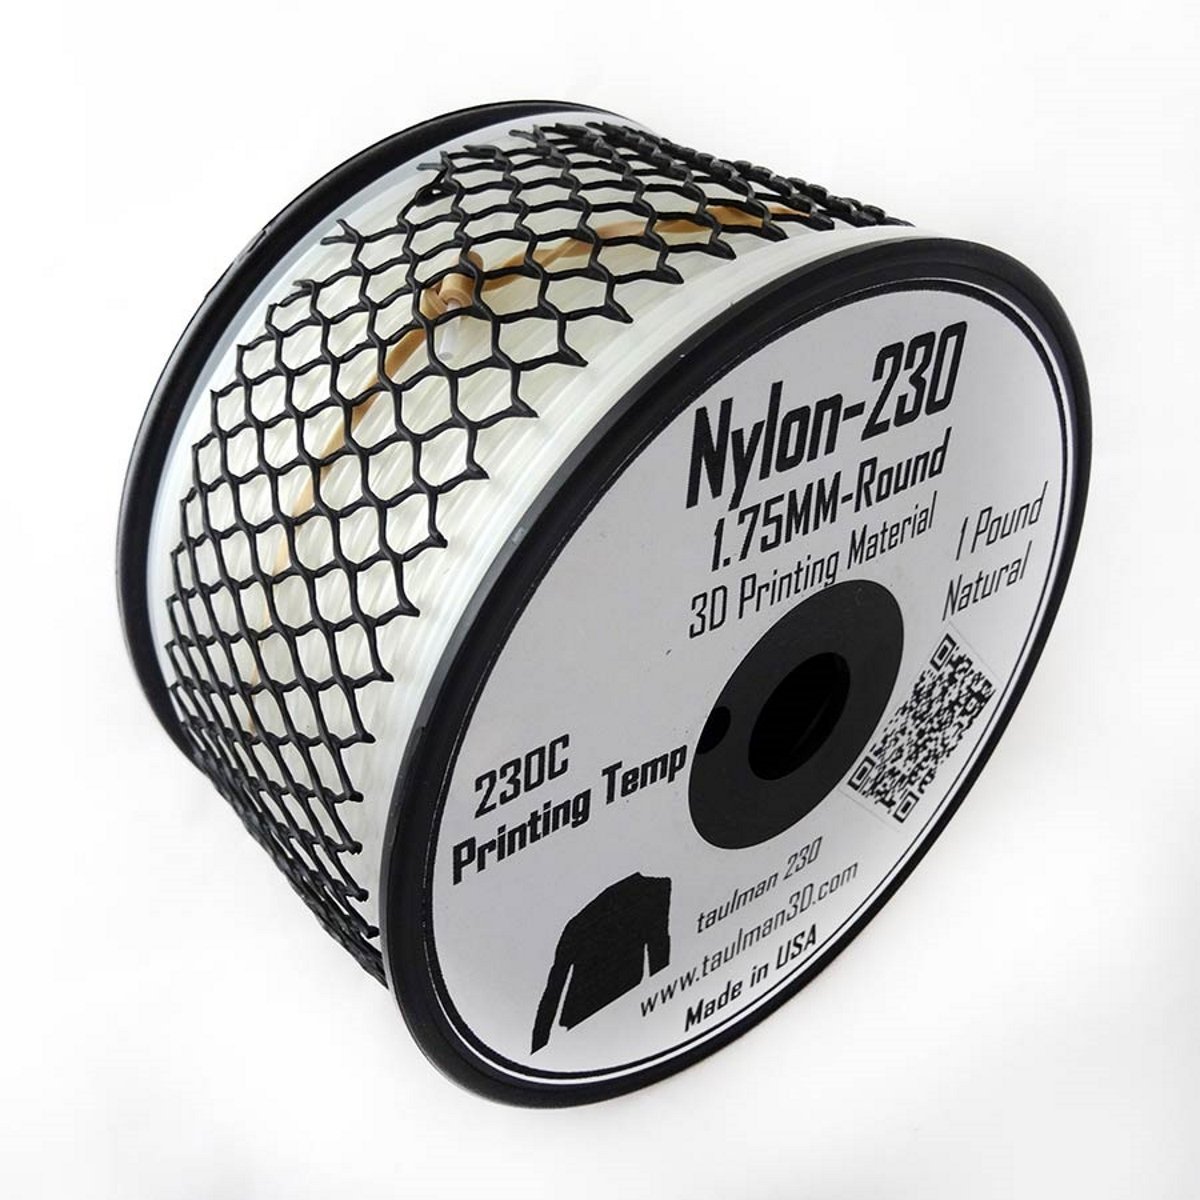 Køb Taulman Nylon 230 - 1.75 mm - 450g 3d printer - Pris 250.00 kr.